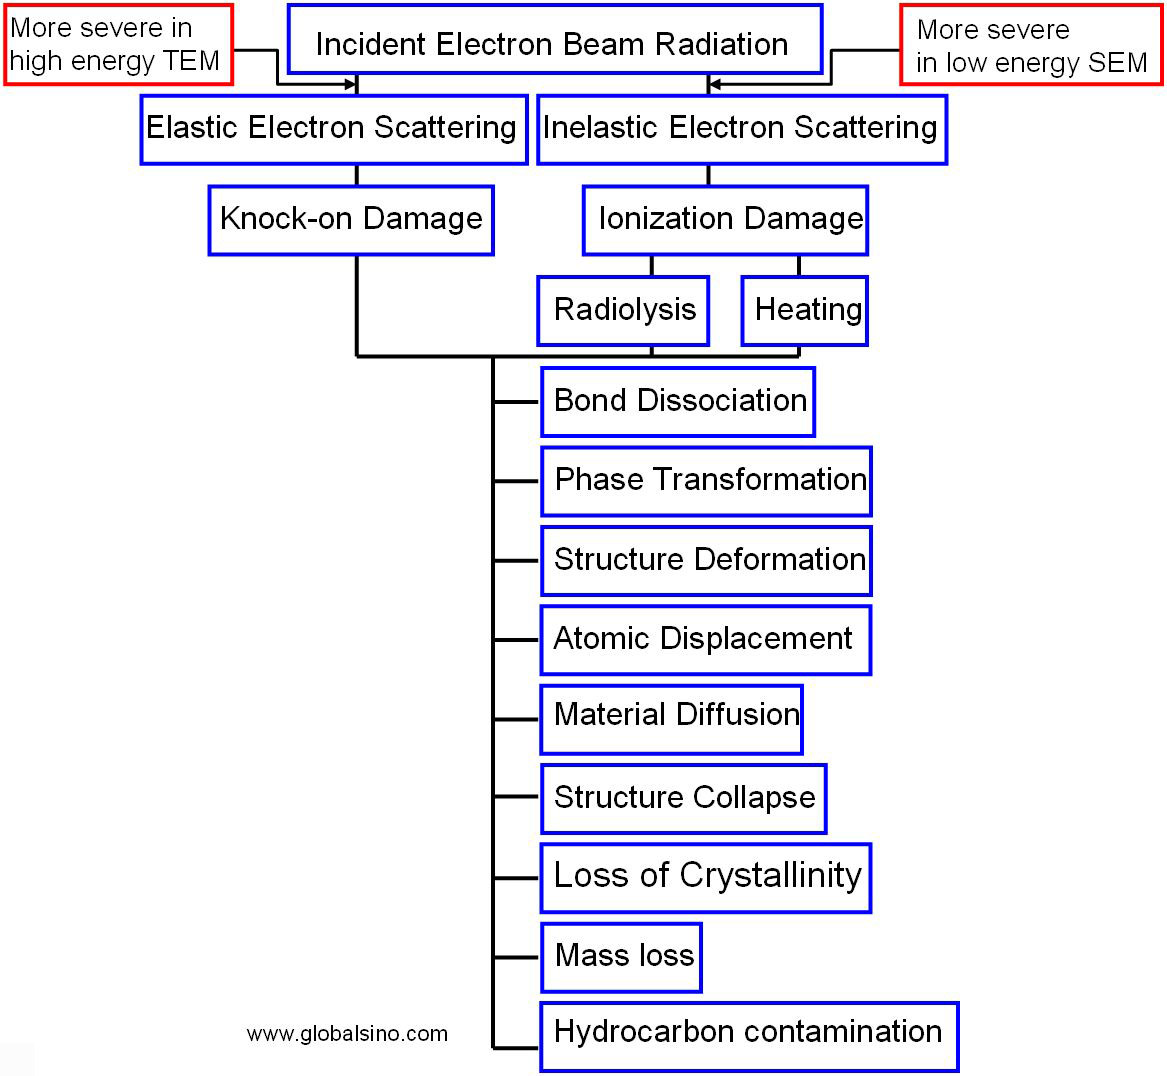 Detailed classification of electron beam radiation damage.